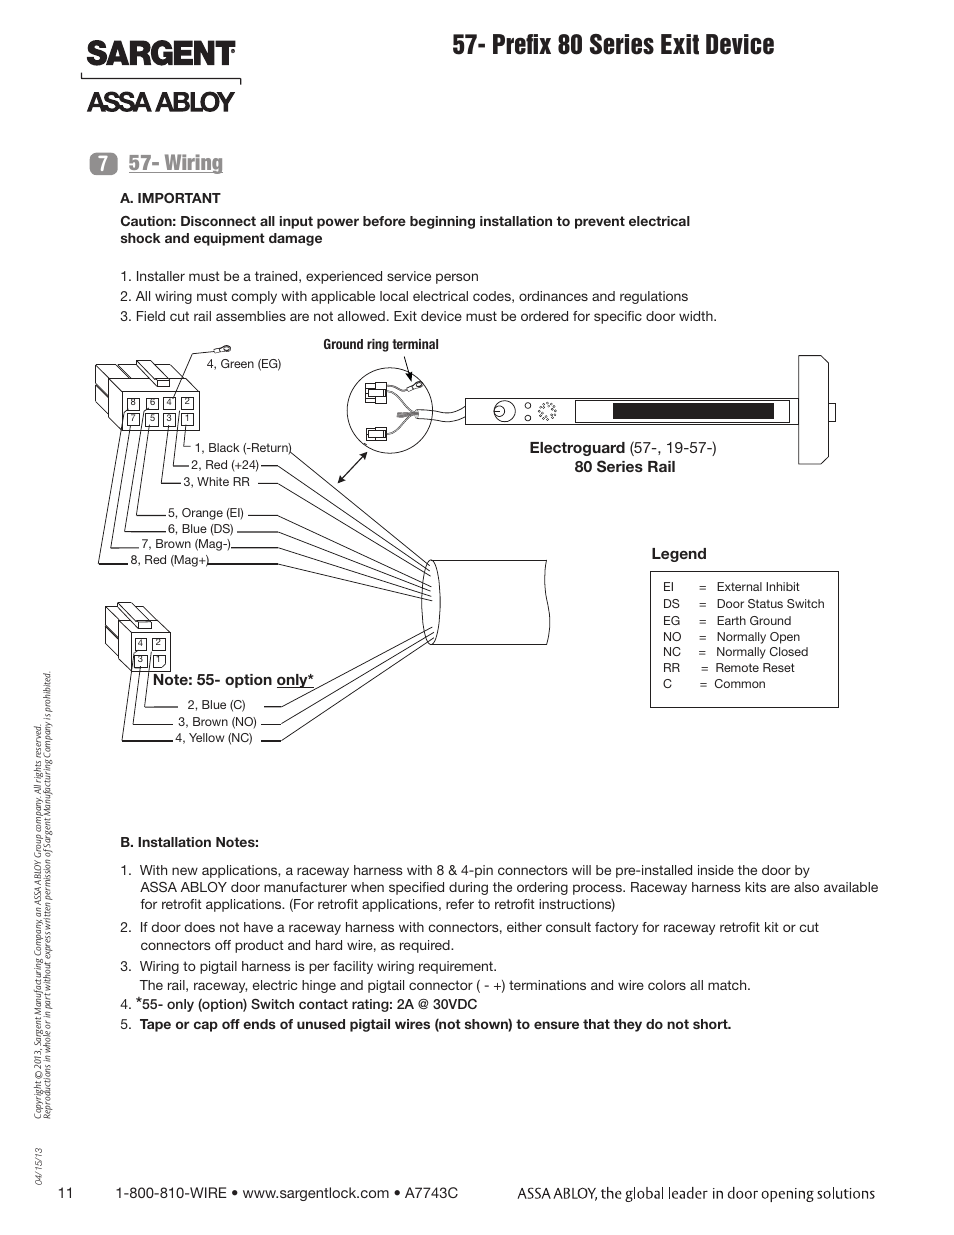 Prefix 80 series exit device, Wiring 7 | SARGENT 57 - Delayed Egress